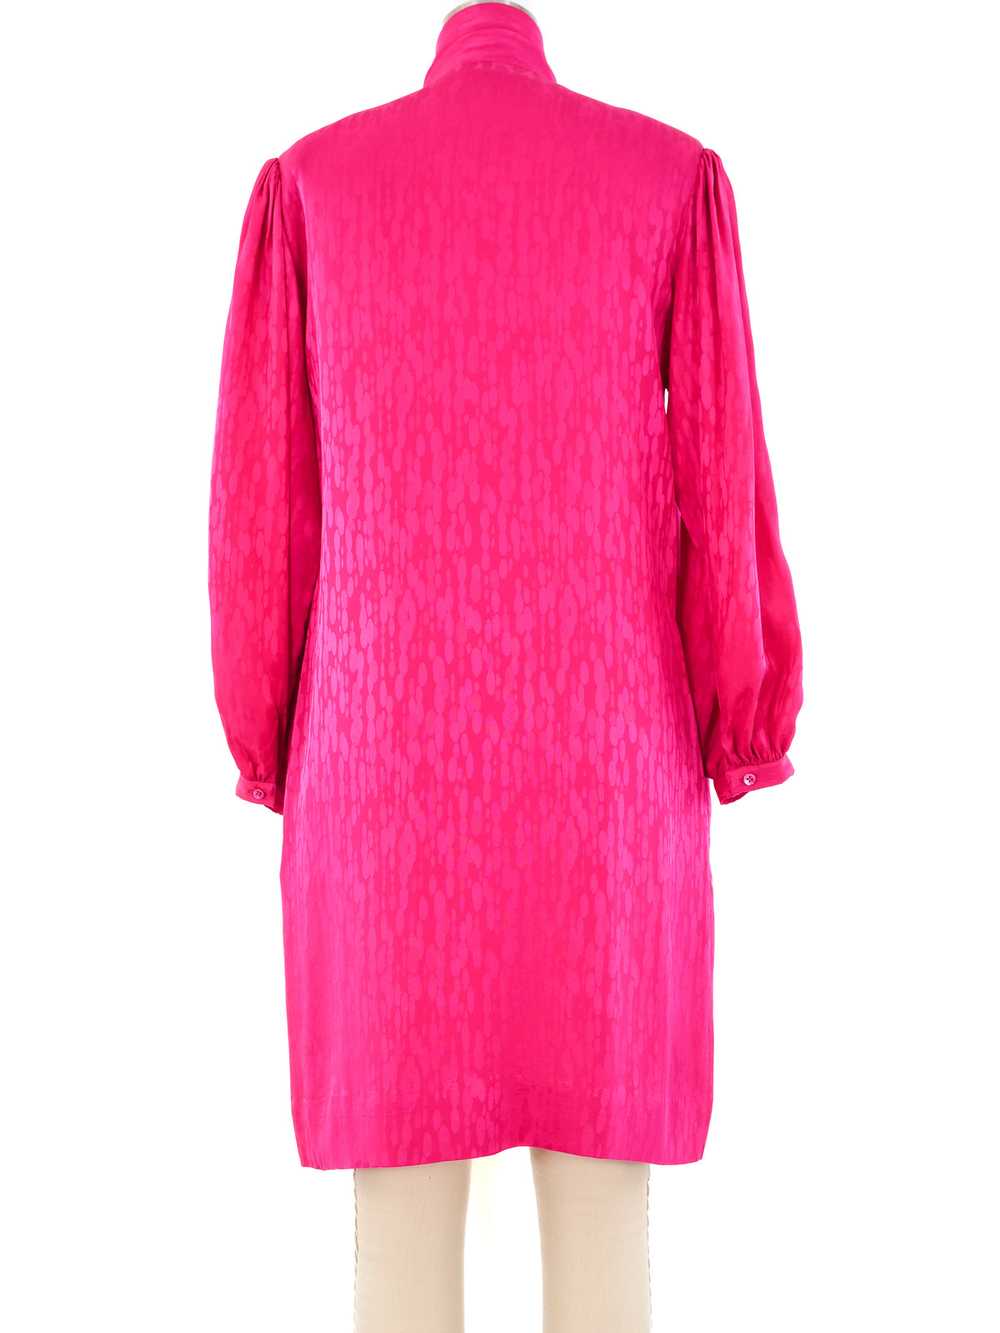 Jacquard Silk Shirt Dress - image 4